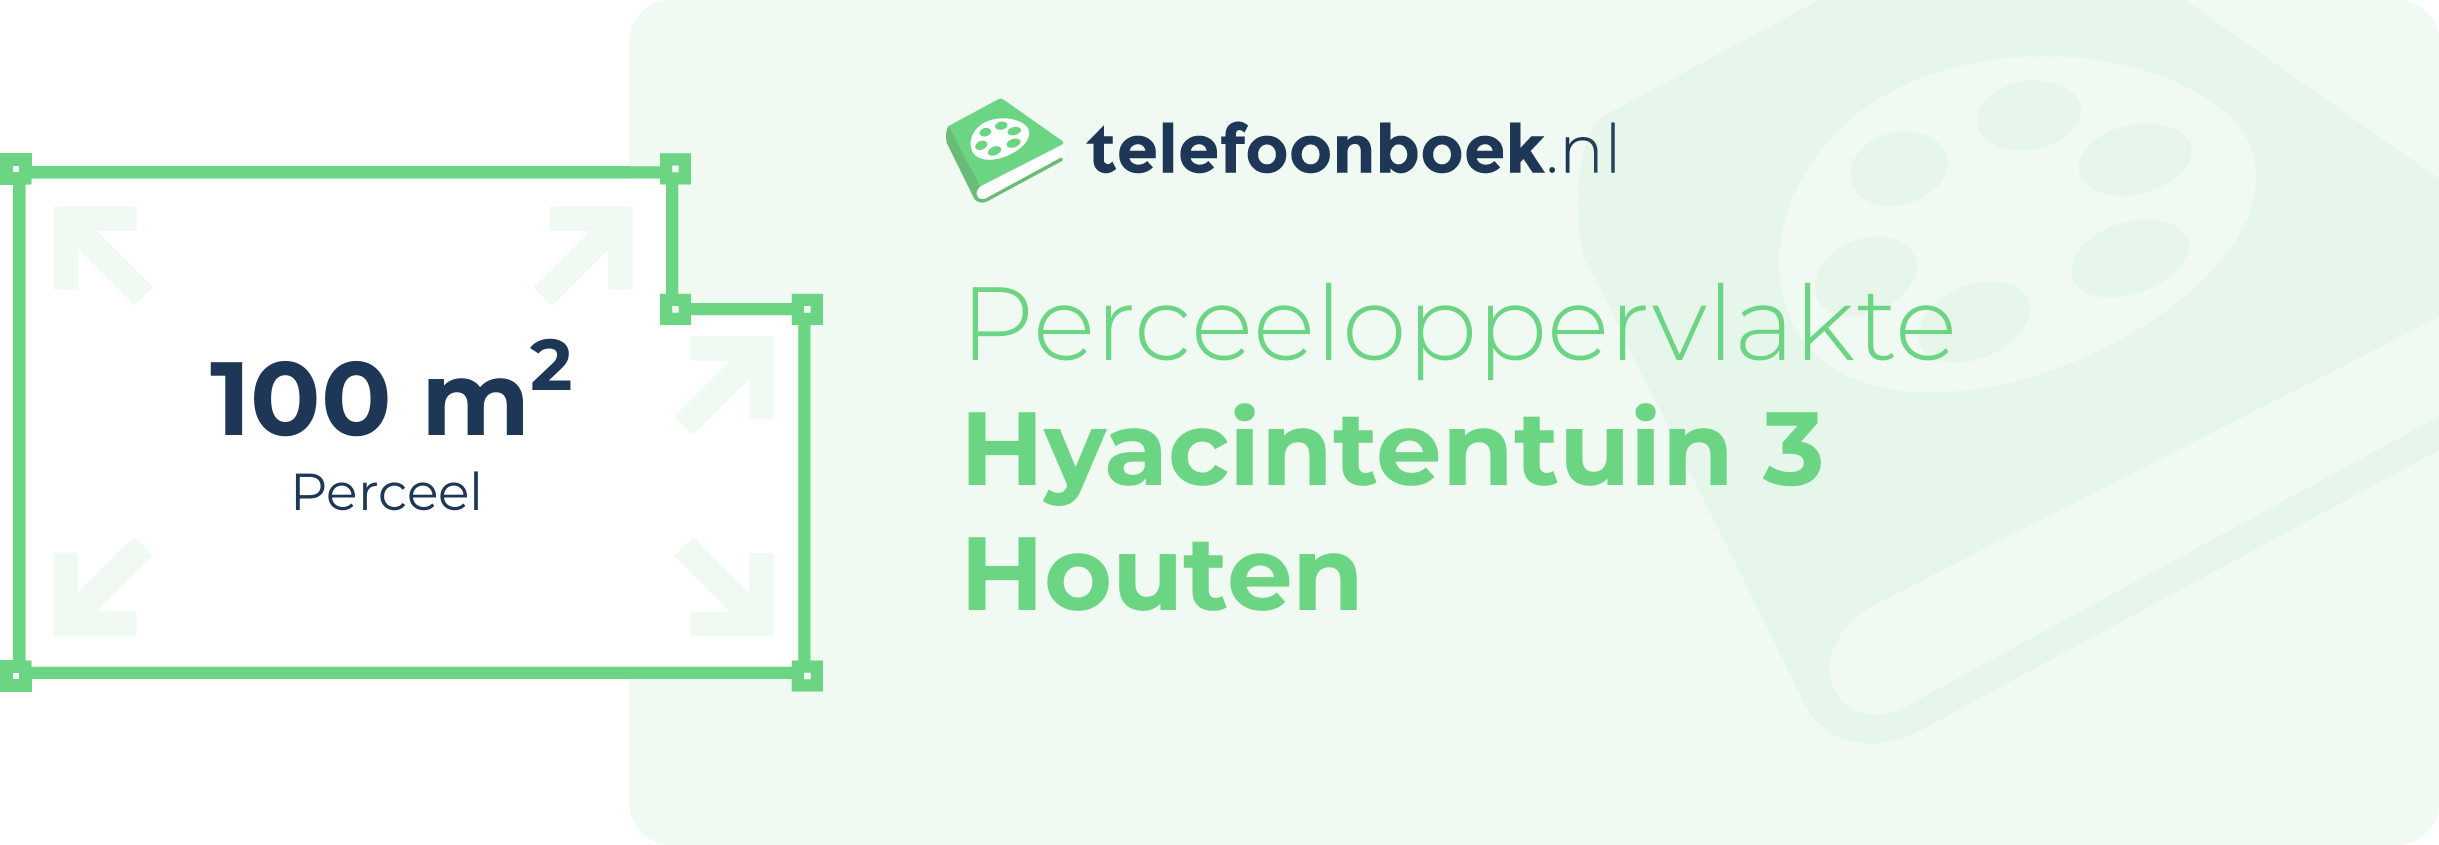 Perceeloppervlakte Hyacintentuin 3 Houten